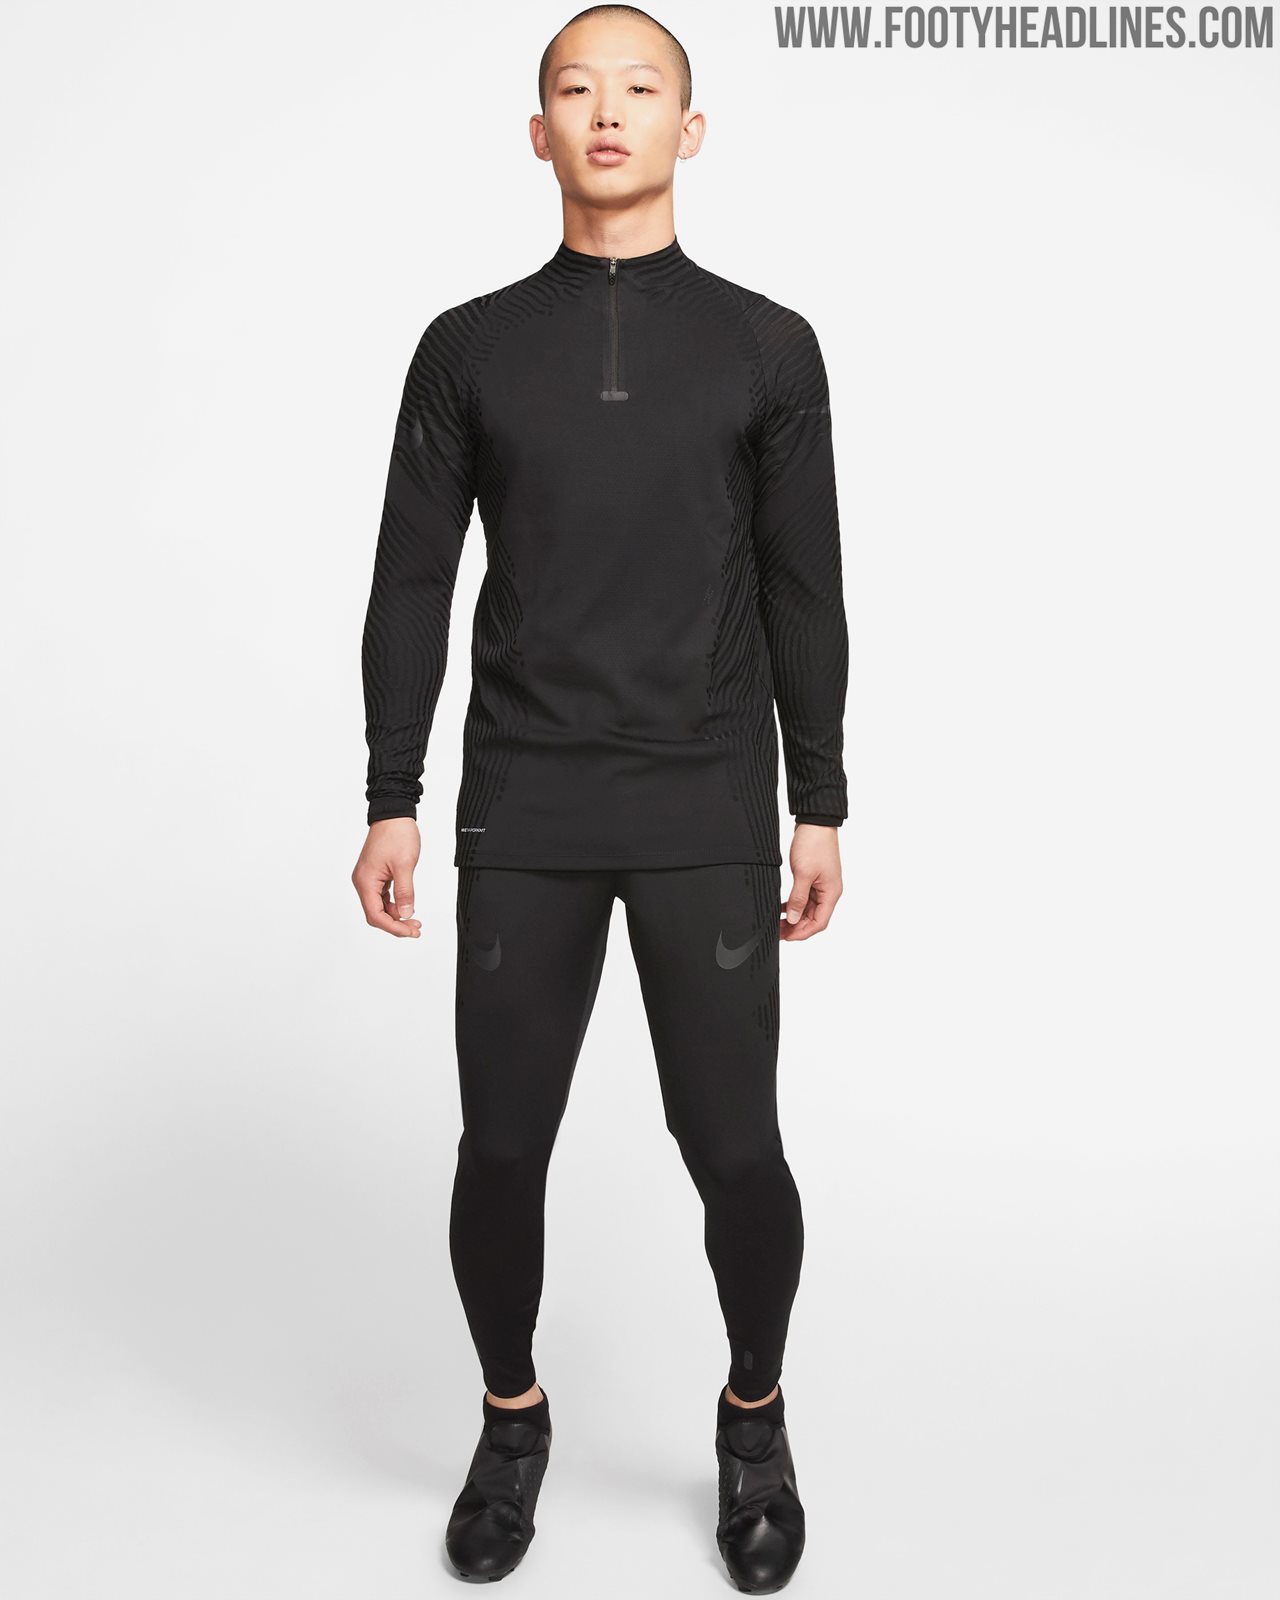 All-New Nike NextGen VaporKnit 2020-21 Jersey / Kit Template Revealed ...